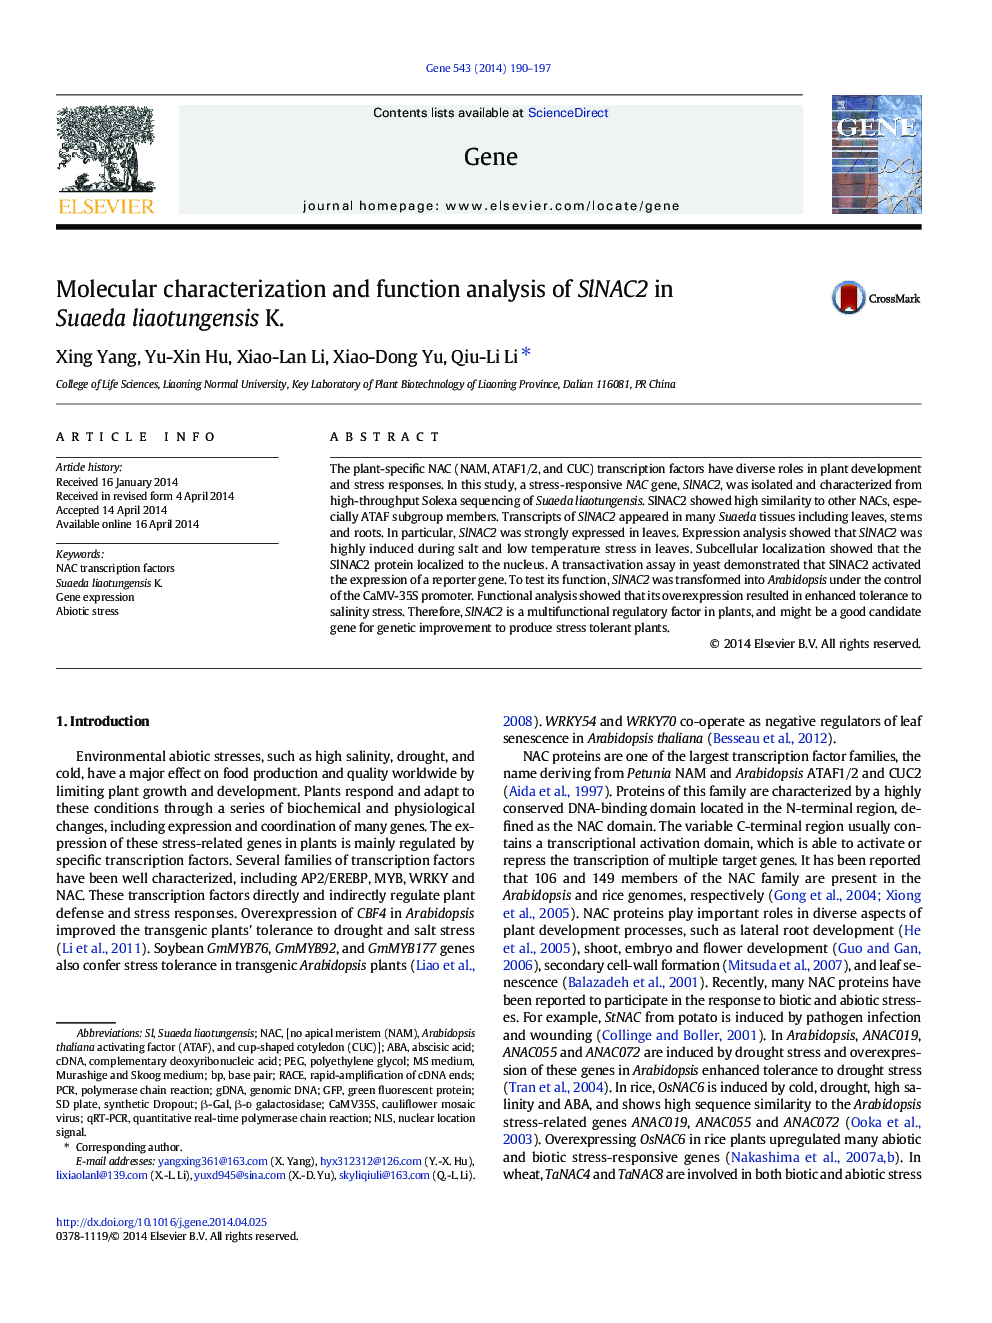 Molecular characterization and function analysis of SlNAC2 in Suaeda liaotungensis K.